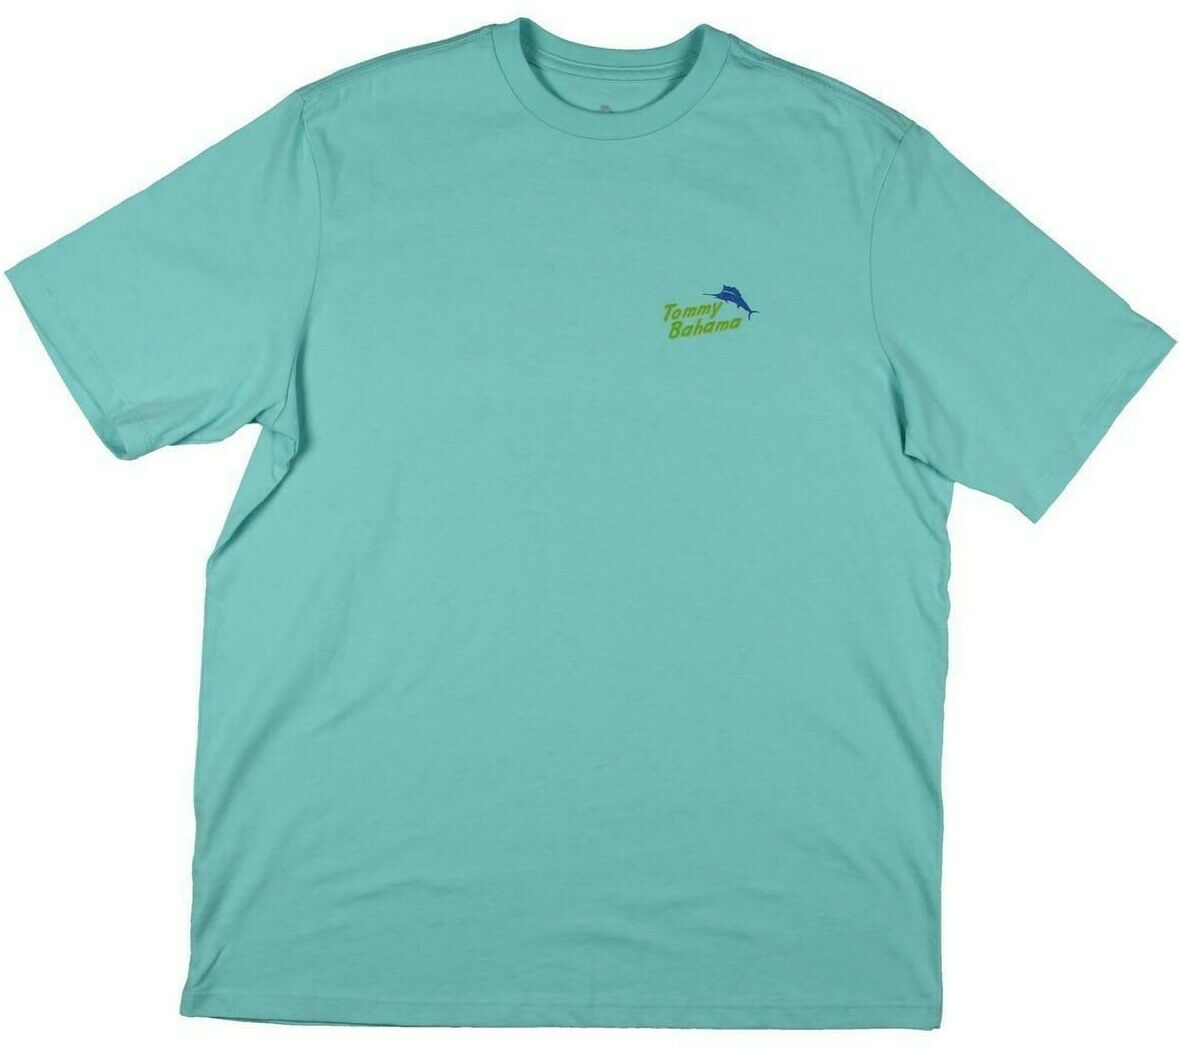 TOMMY BAHAMA Flock Star Humming Bird Tree Branch Blue Graphics Shirt Medium Size